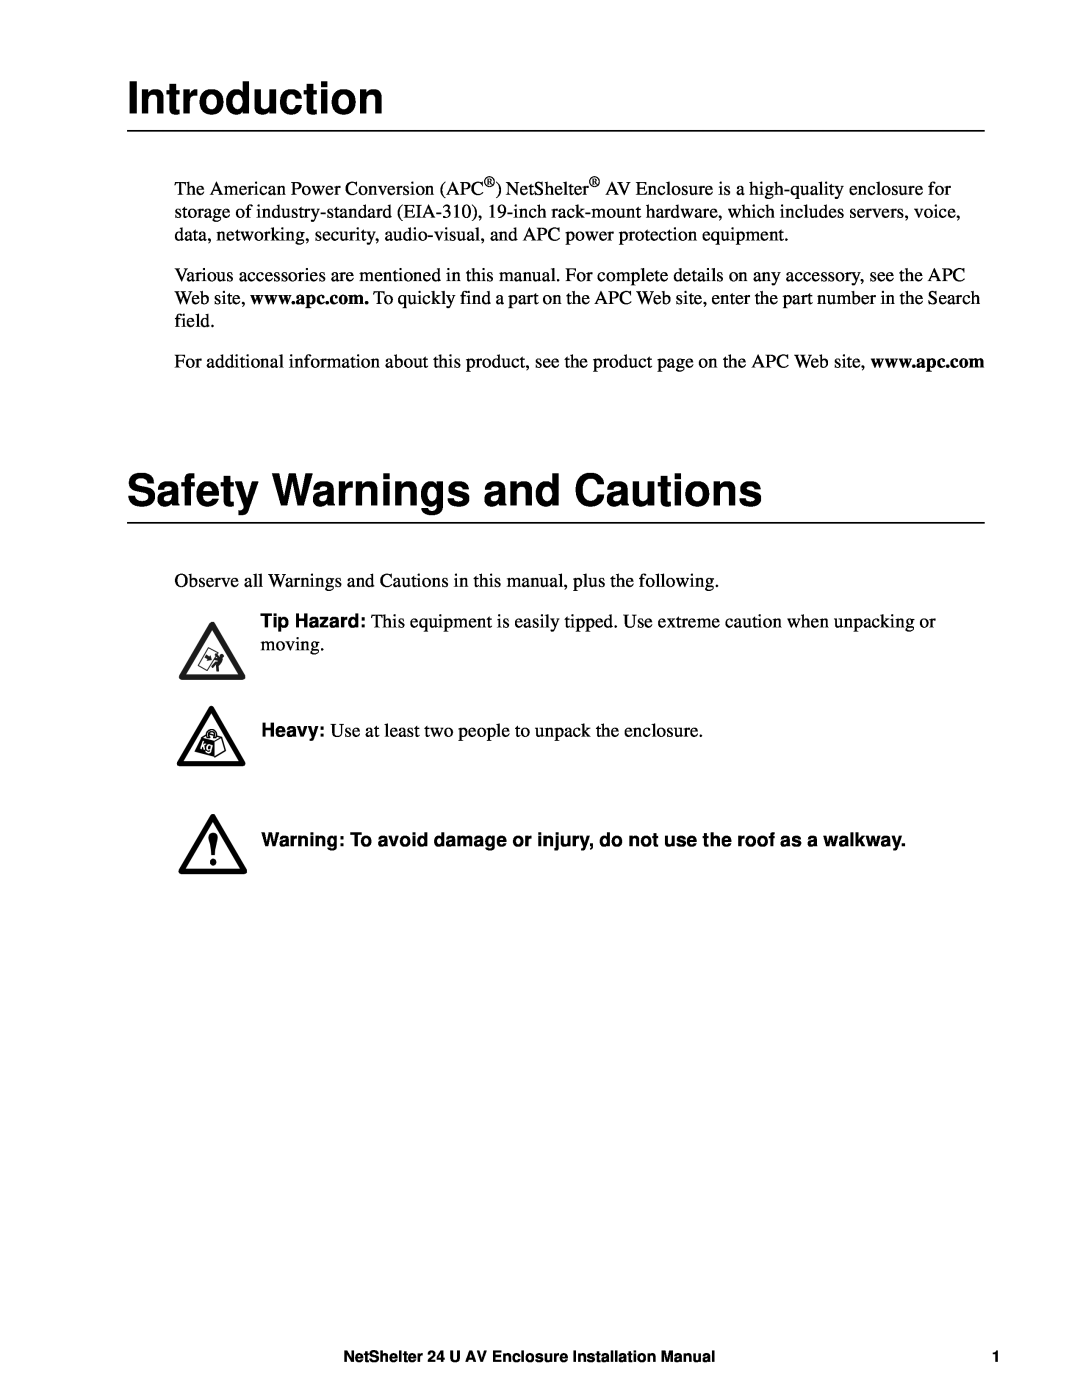 APC AR3814 installation manual Introduction, Safety Warnings and Cautions, NetShelter 24 U AV Enclosure Installation Manual 